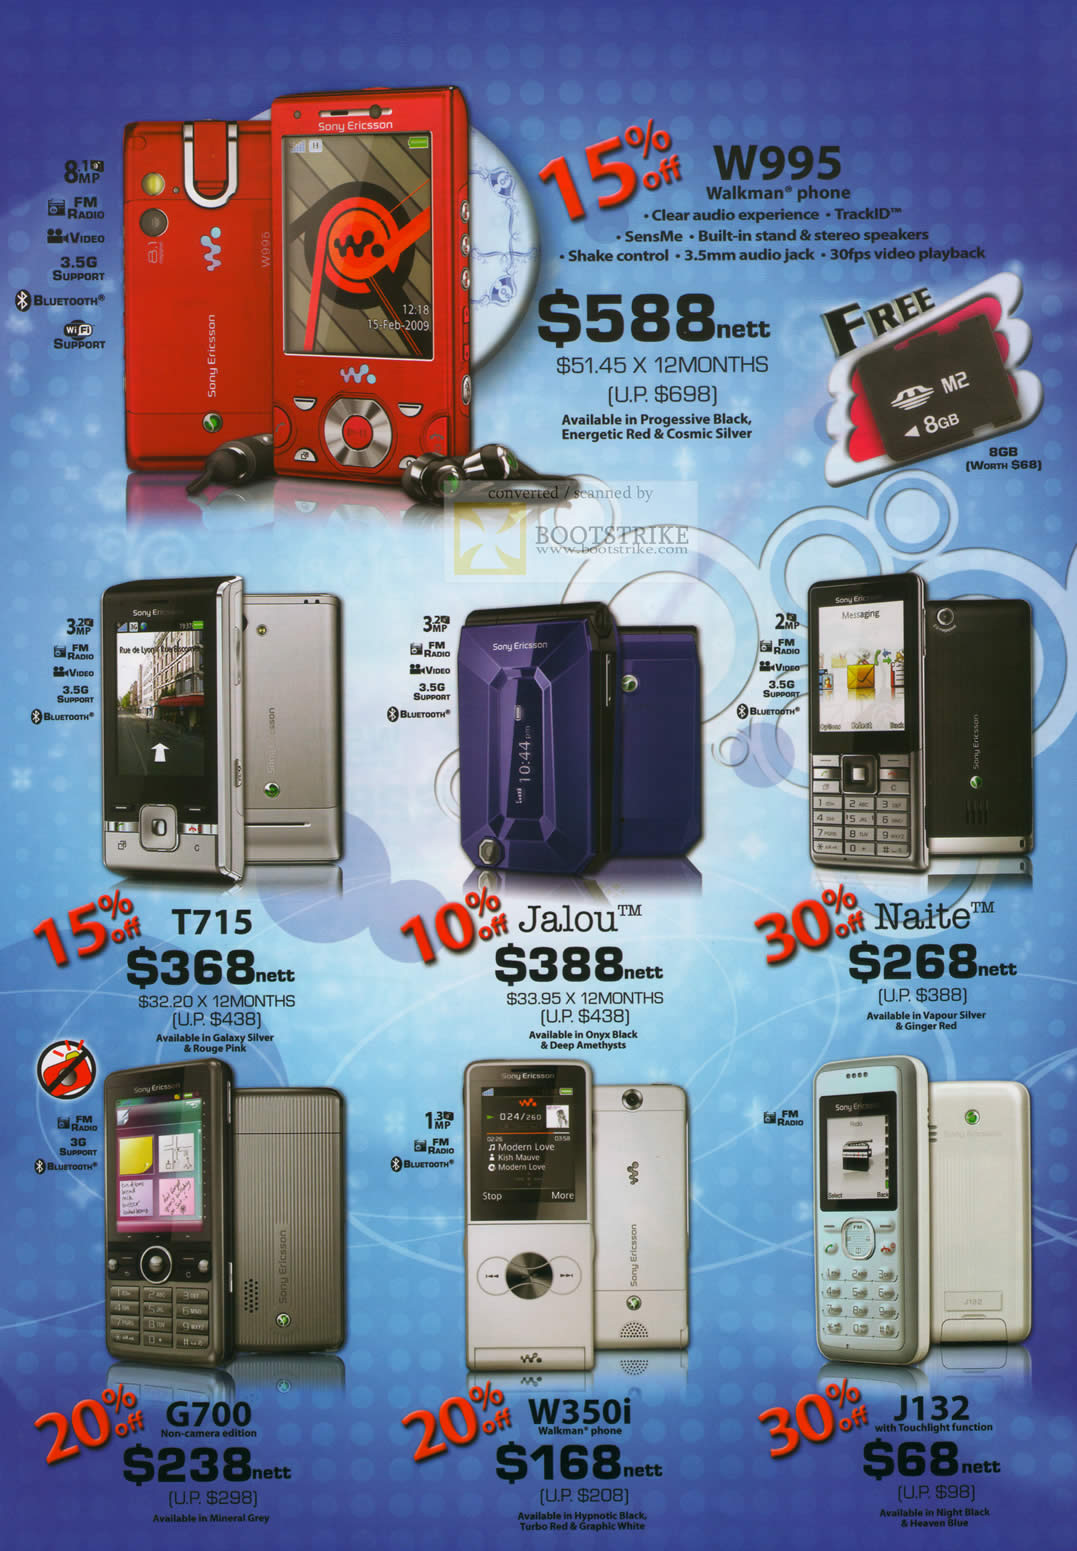 Sitex 2009 price list image brochure of Sony Ericsson 6Range W995 T715 Jalou Naite G700 W350i J132